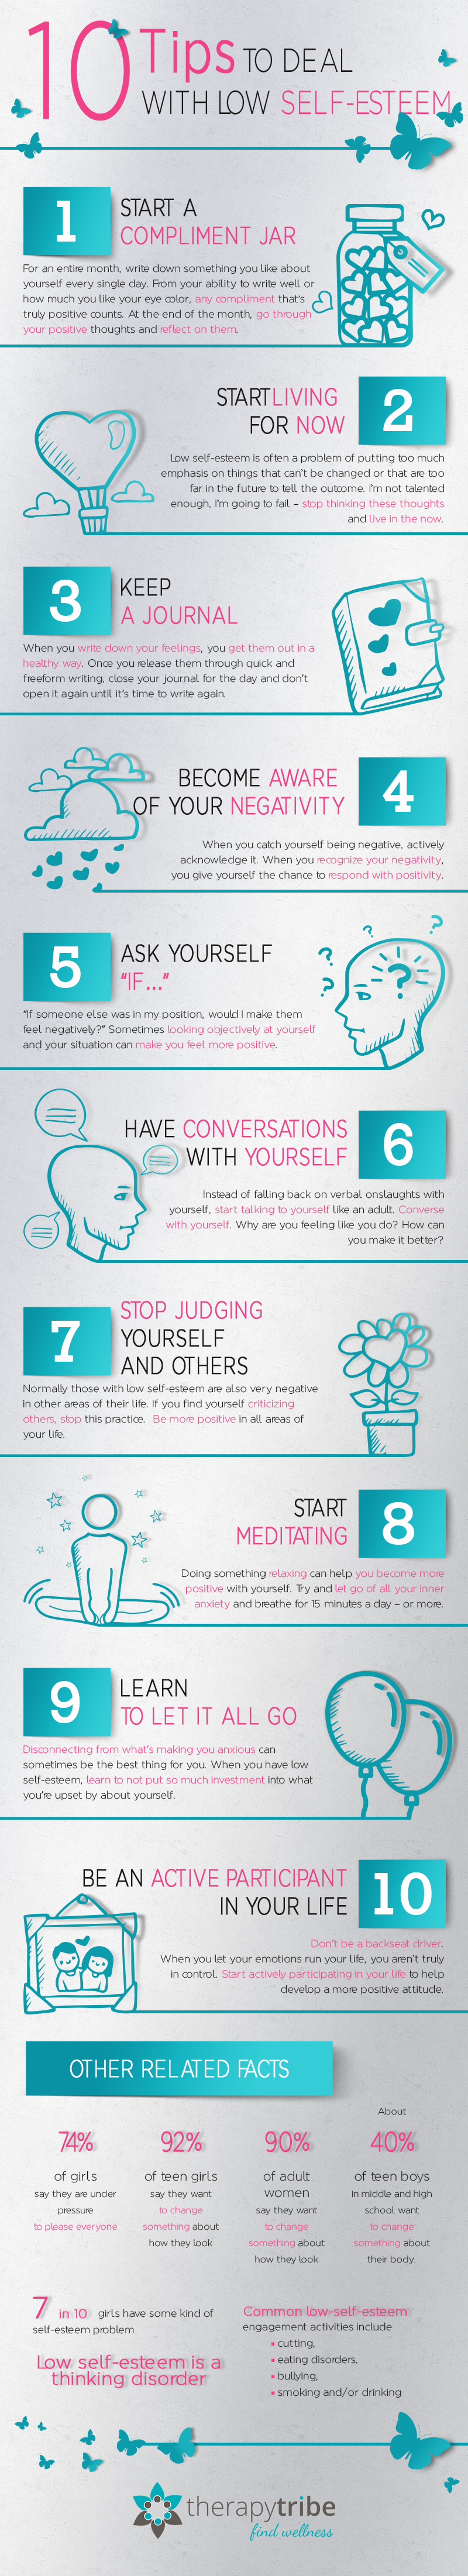 10 Steps To Improve Low Self-Esteem Infographic